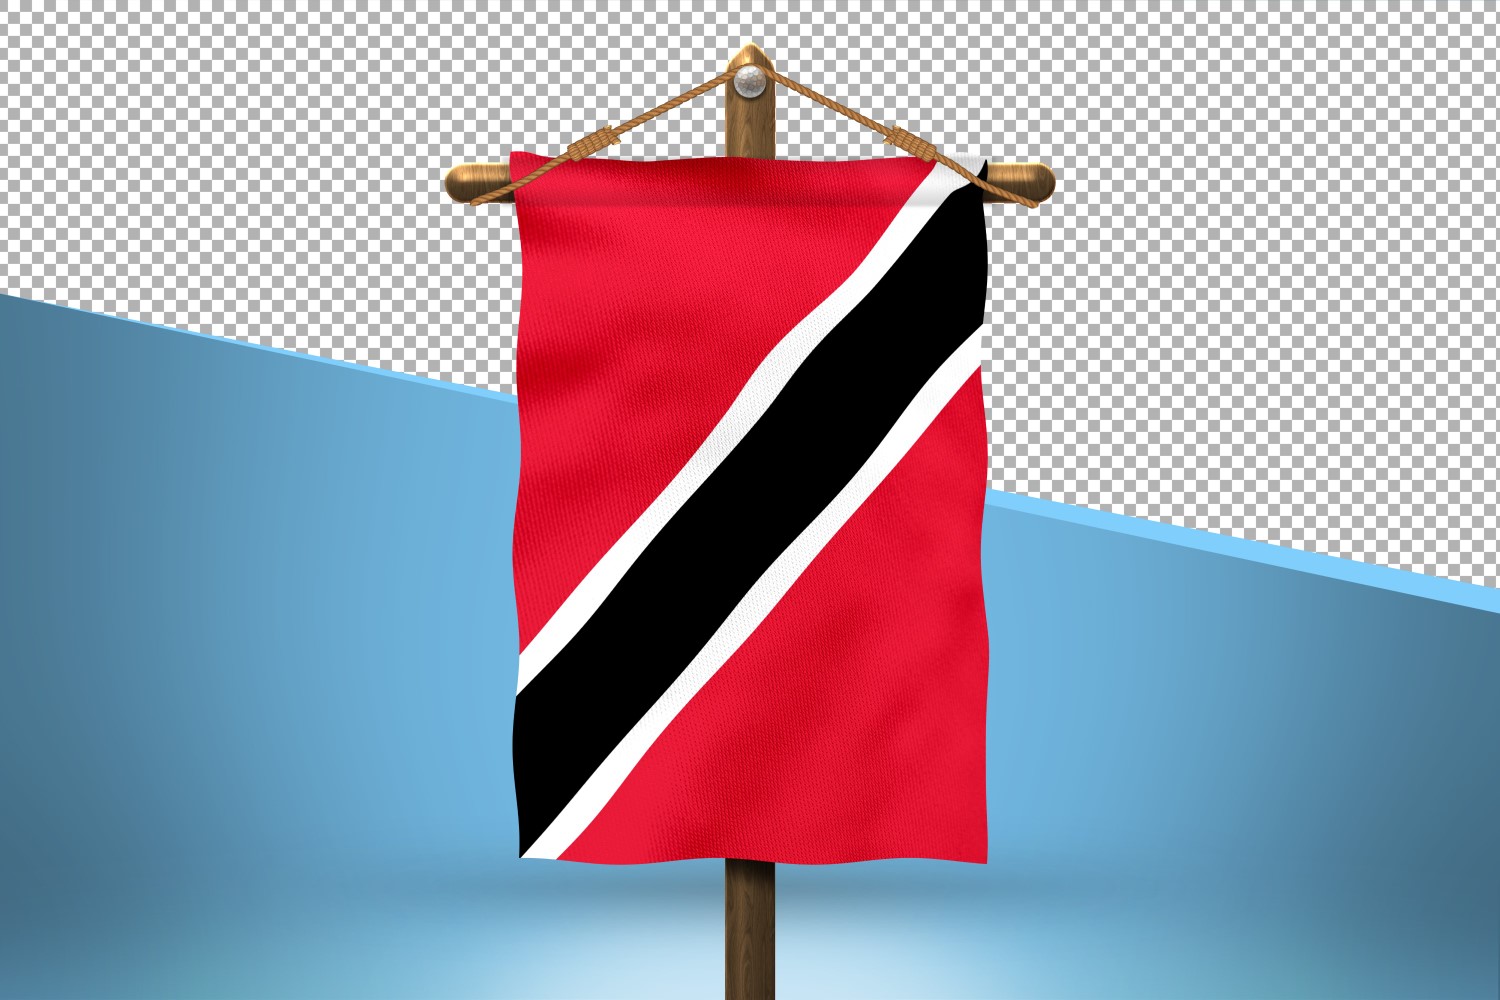 Trinidad and Tobago Hang Flag Design Background